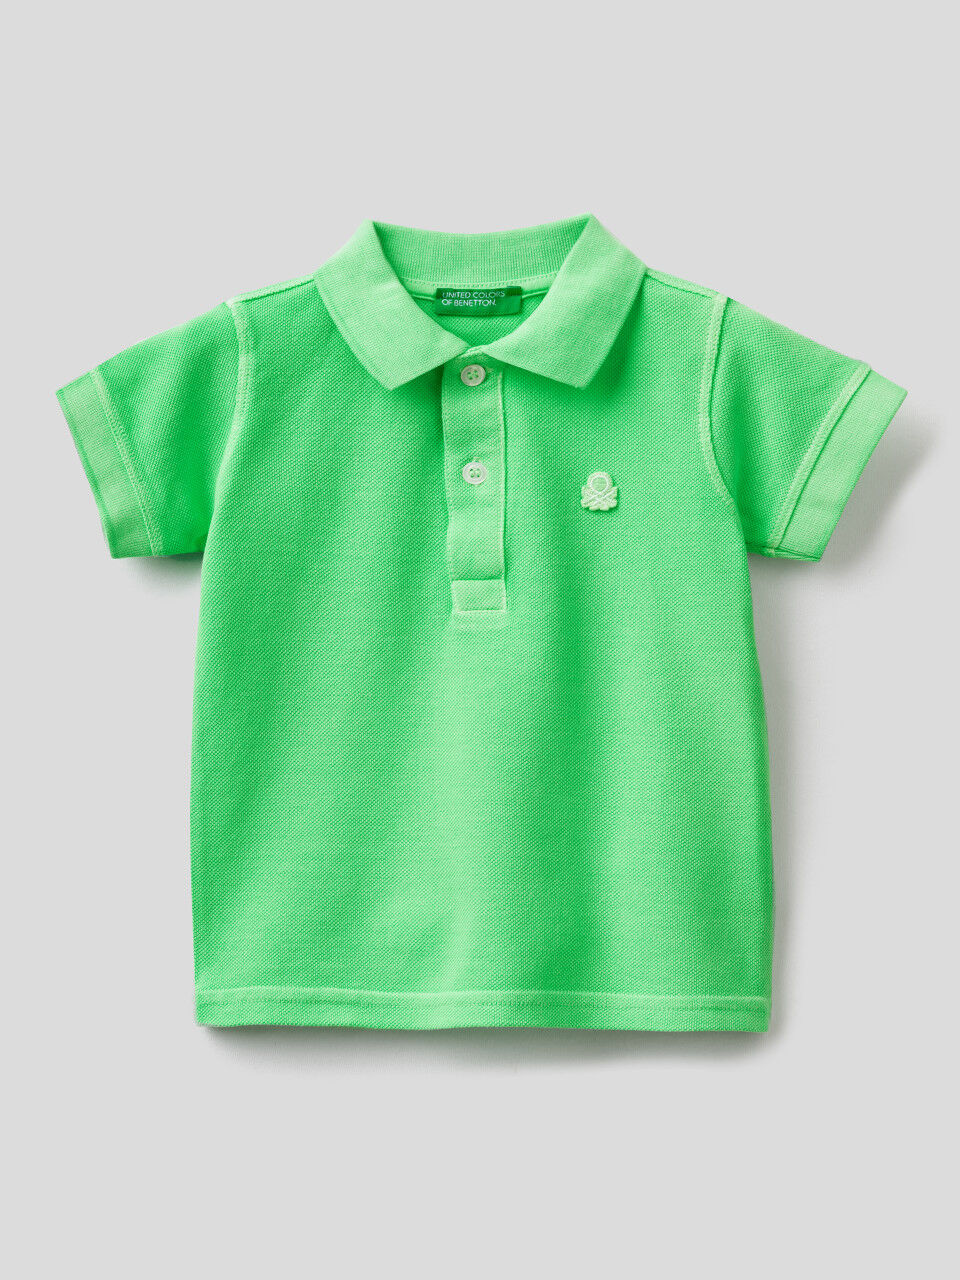 United Colors of Benetton Baby-Jungen Camicia Quadri Check Freizeithemd